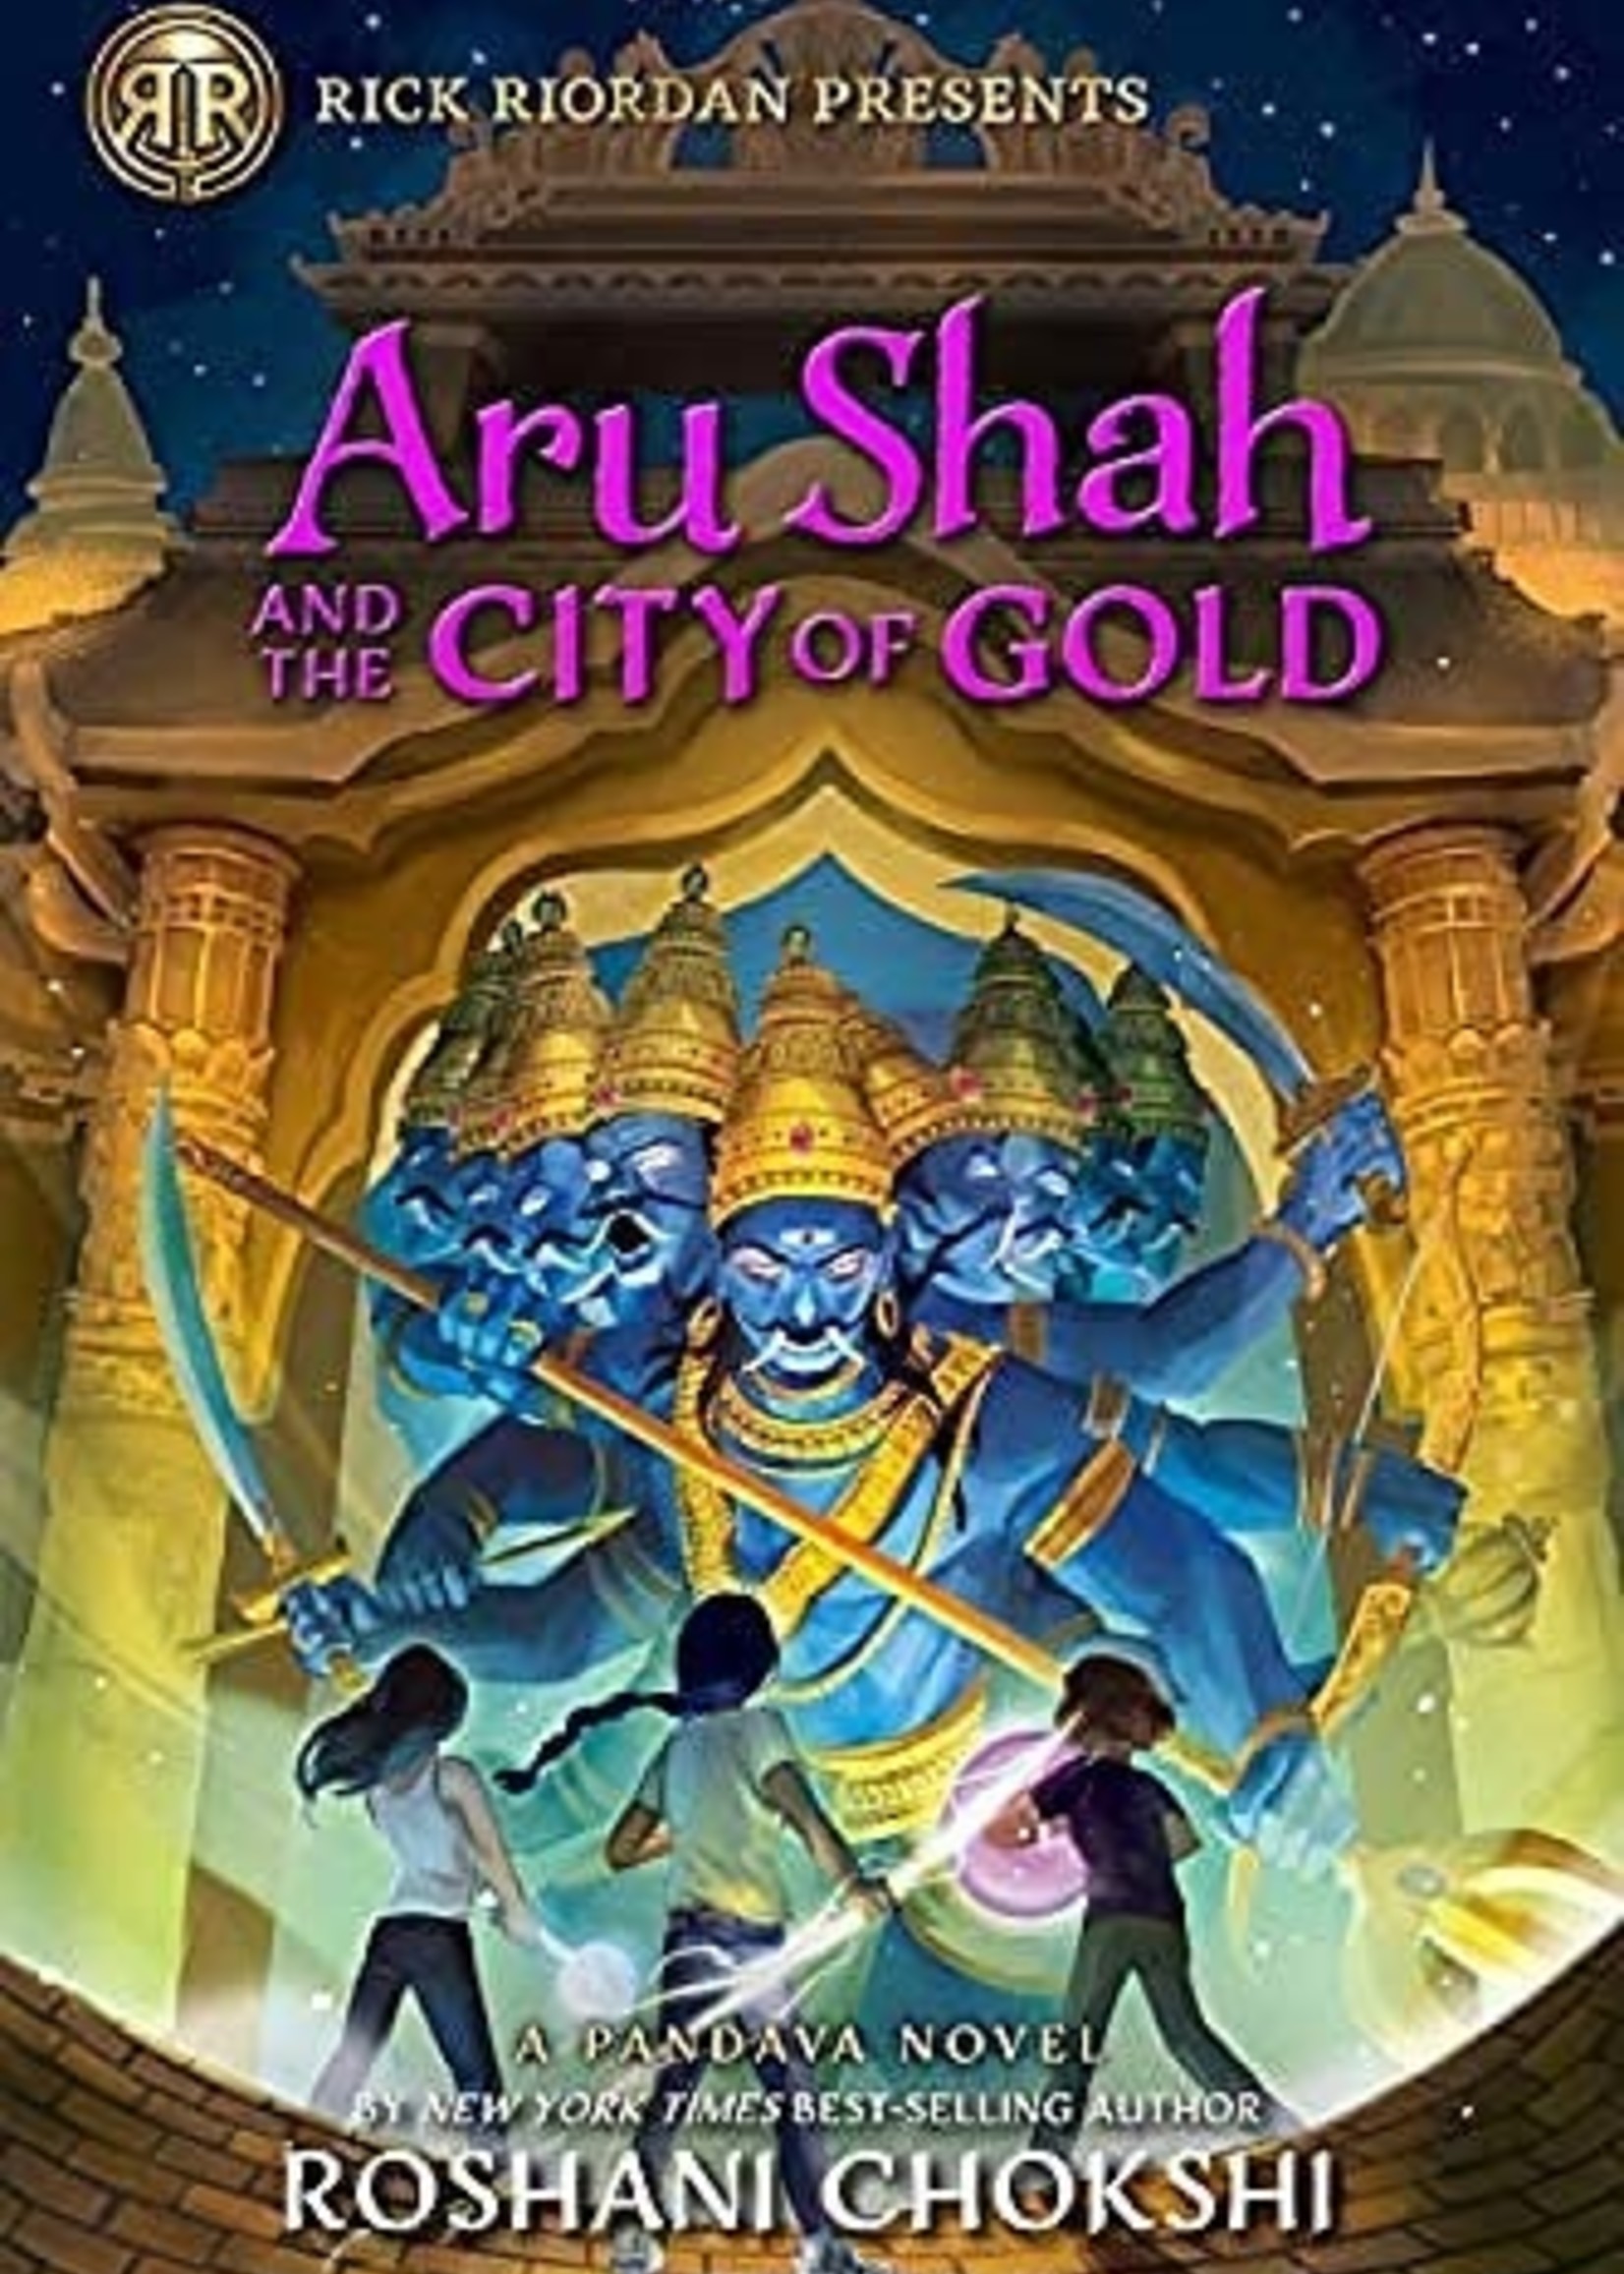 Rick Riordan Presents: Pandava #04, Aru Shah And The City of Gold - Paperback